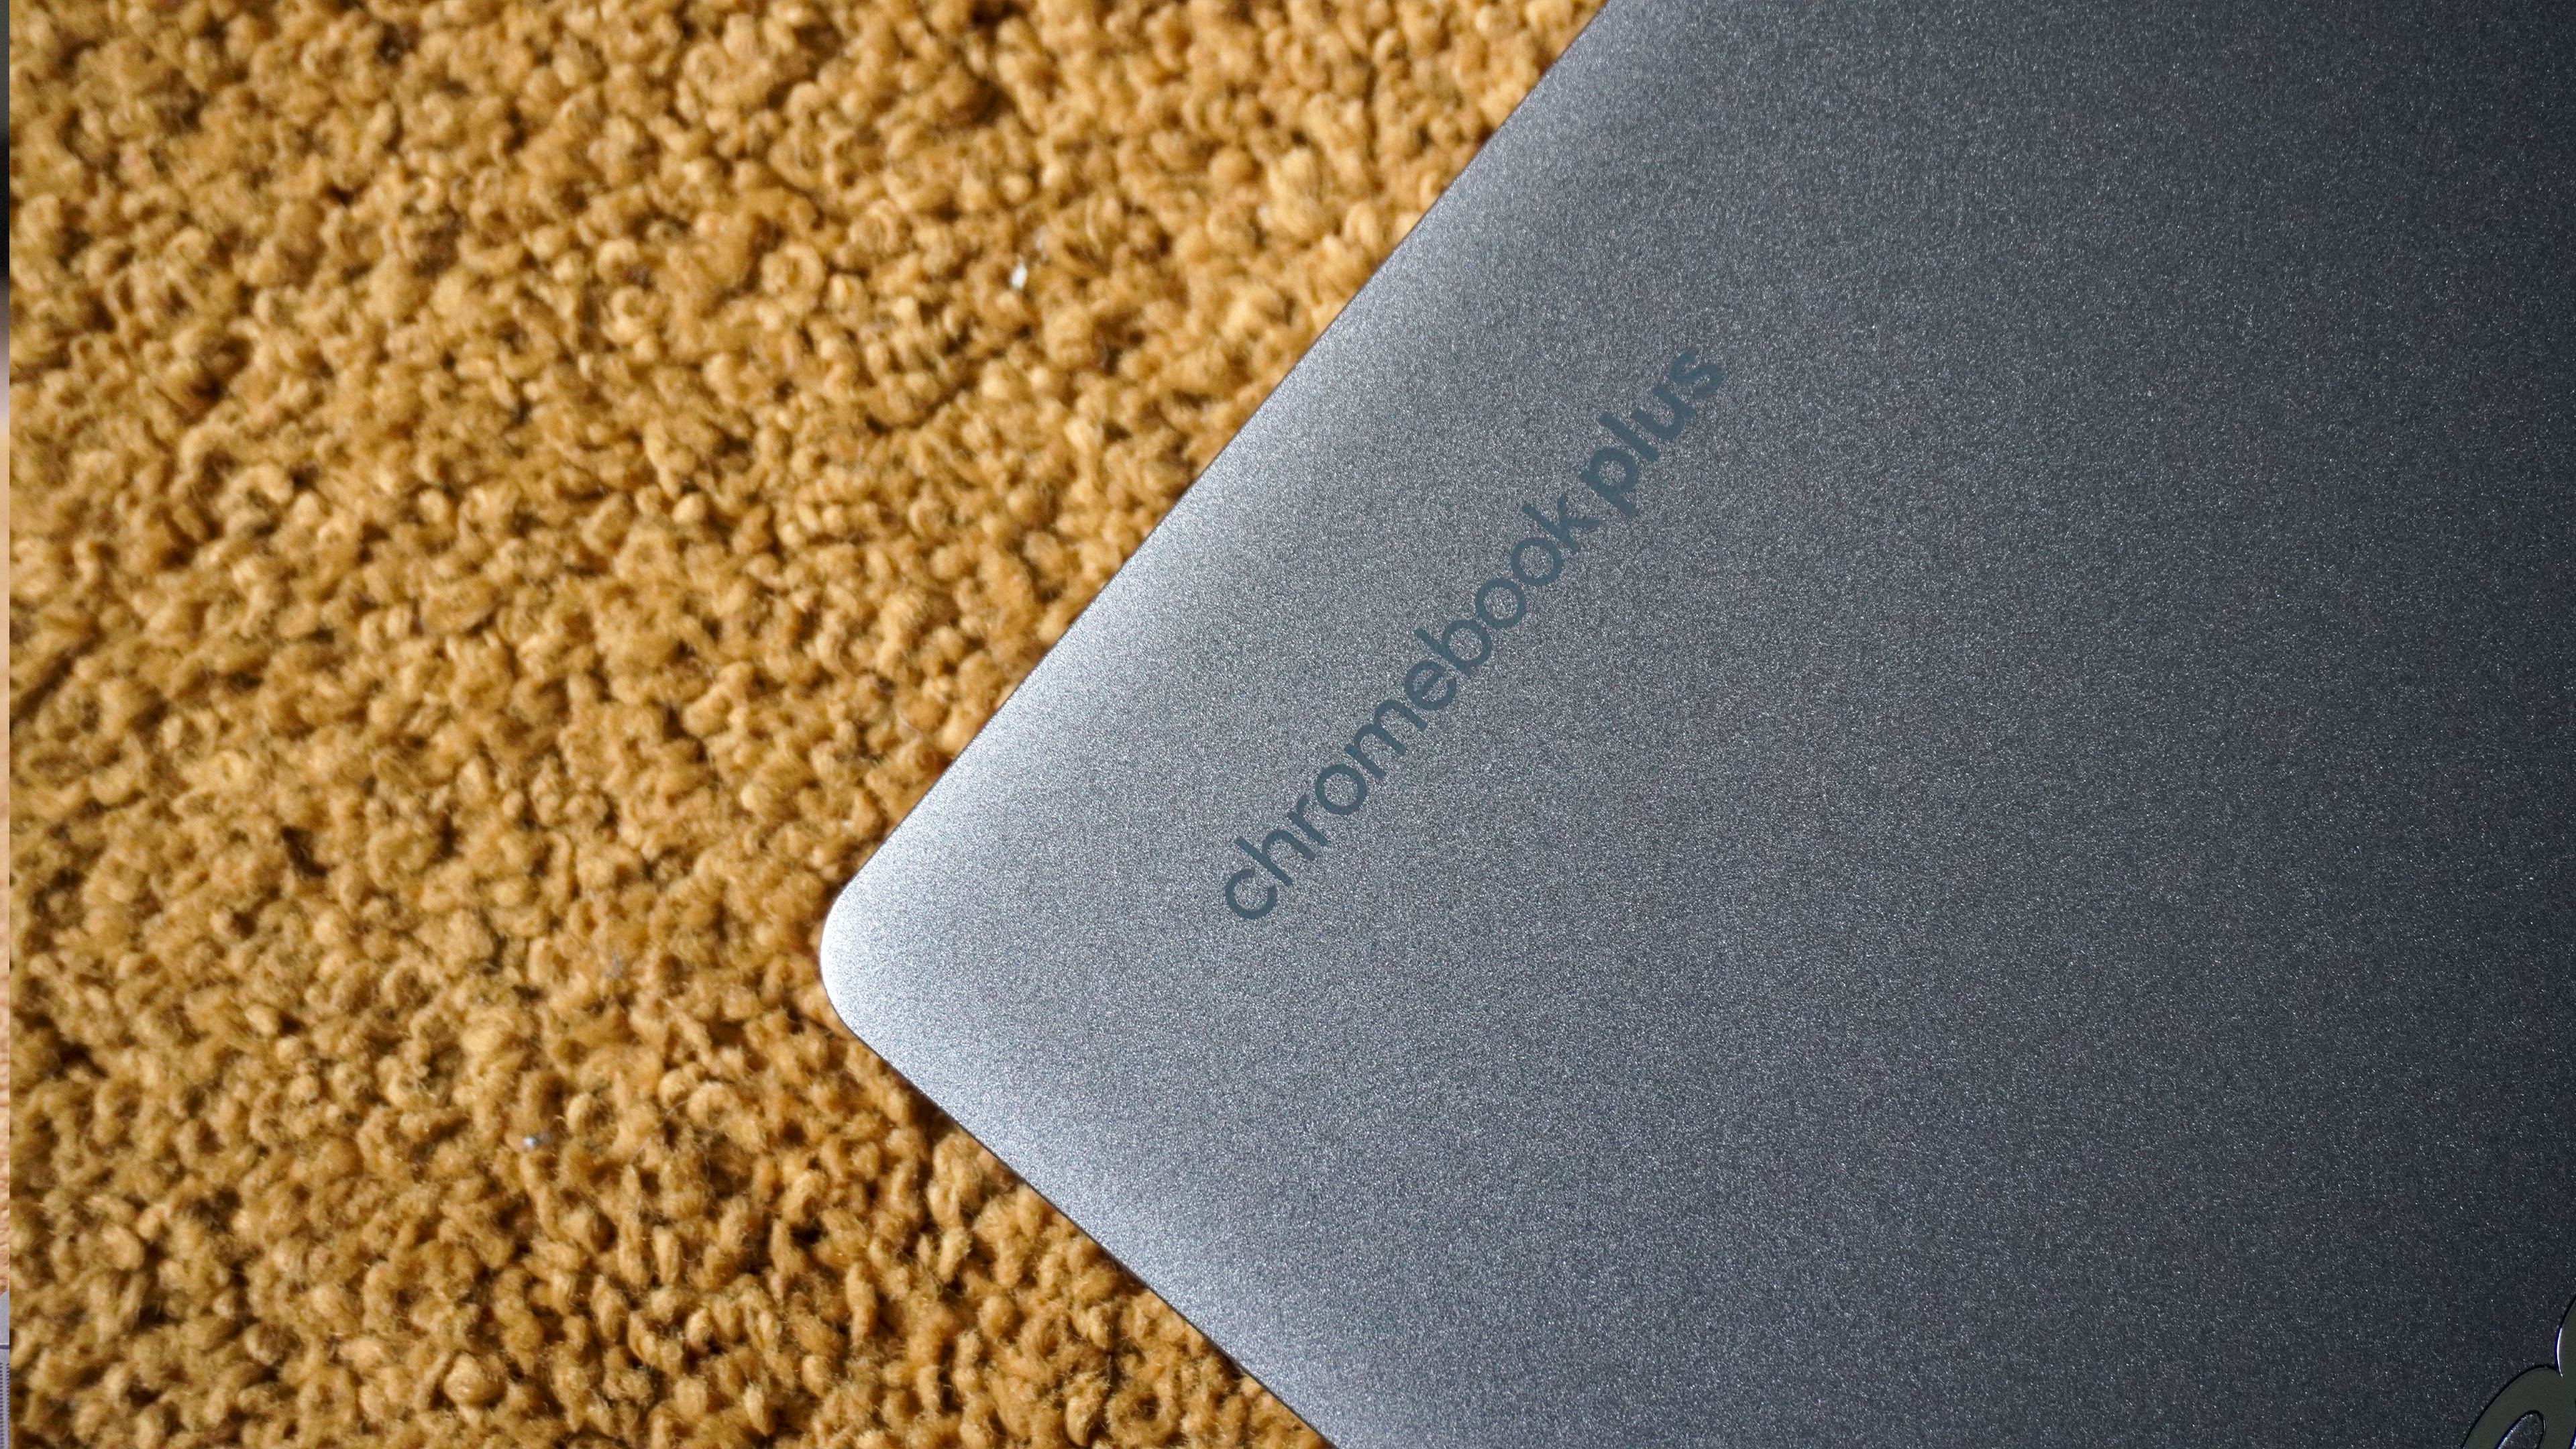 Chromebook Plus AI features